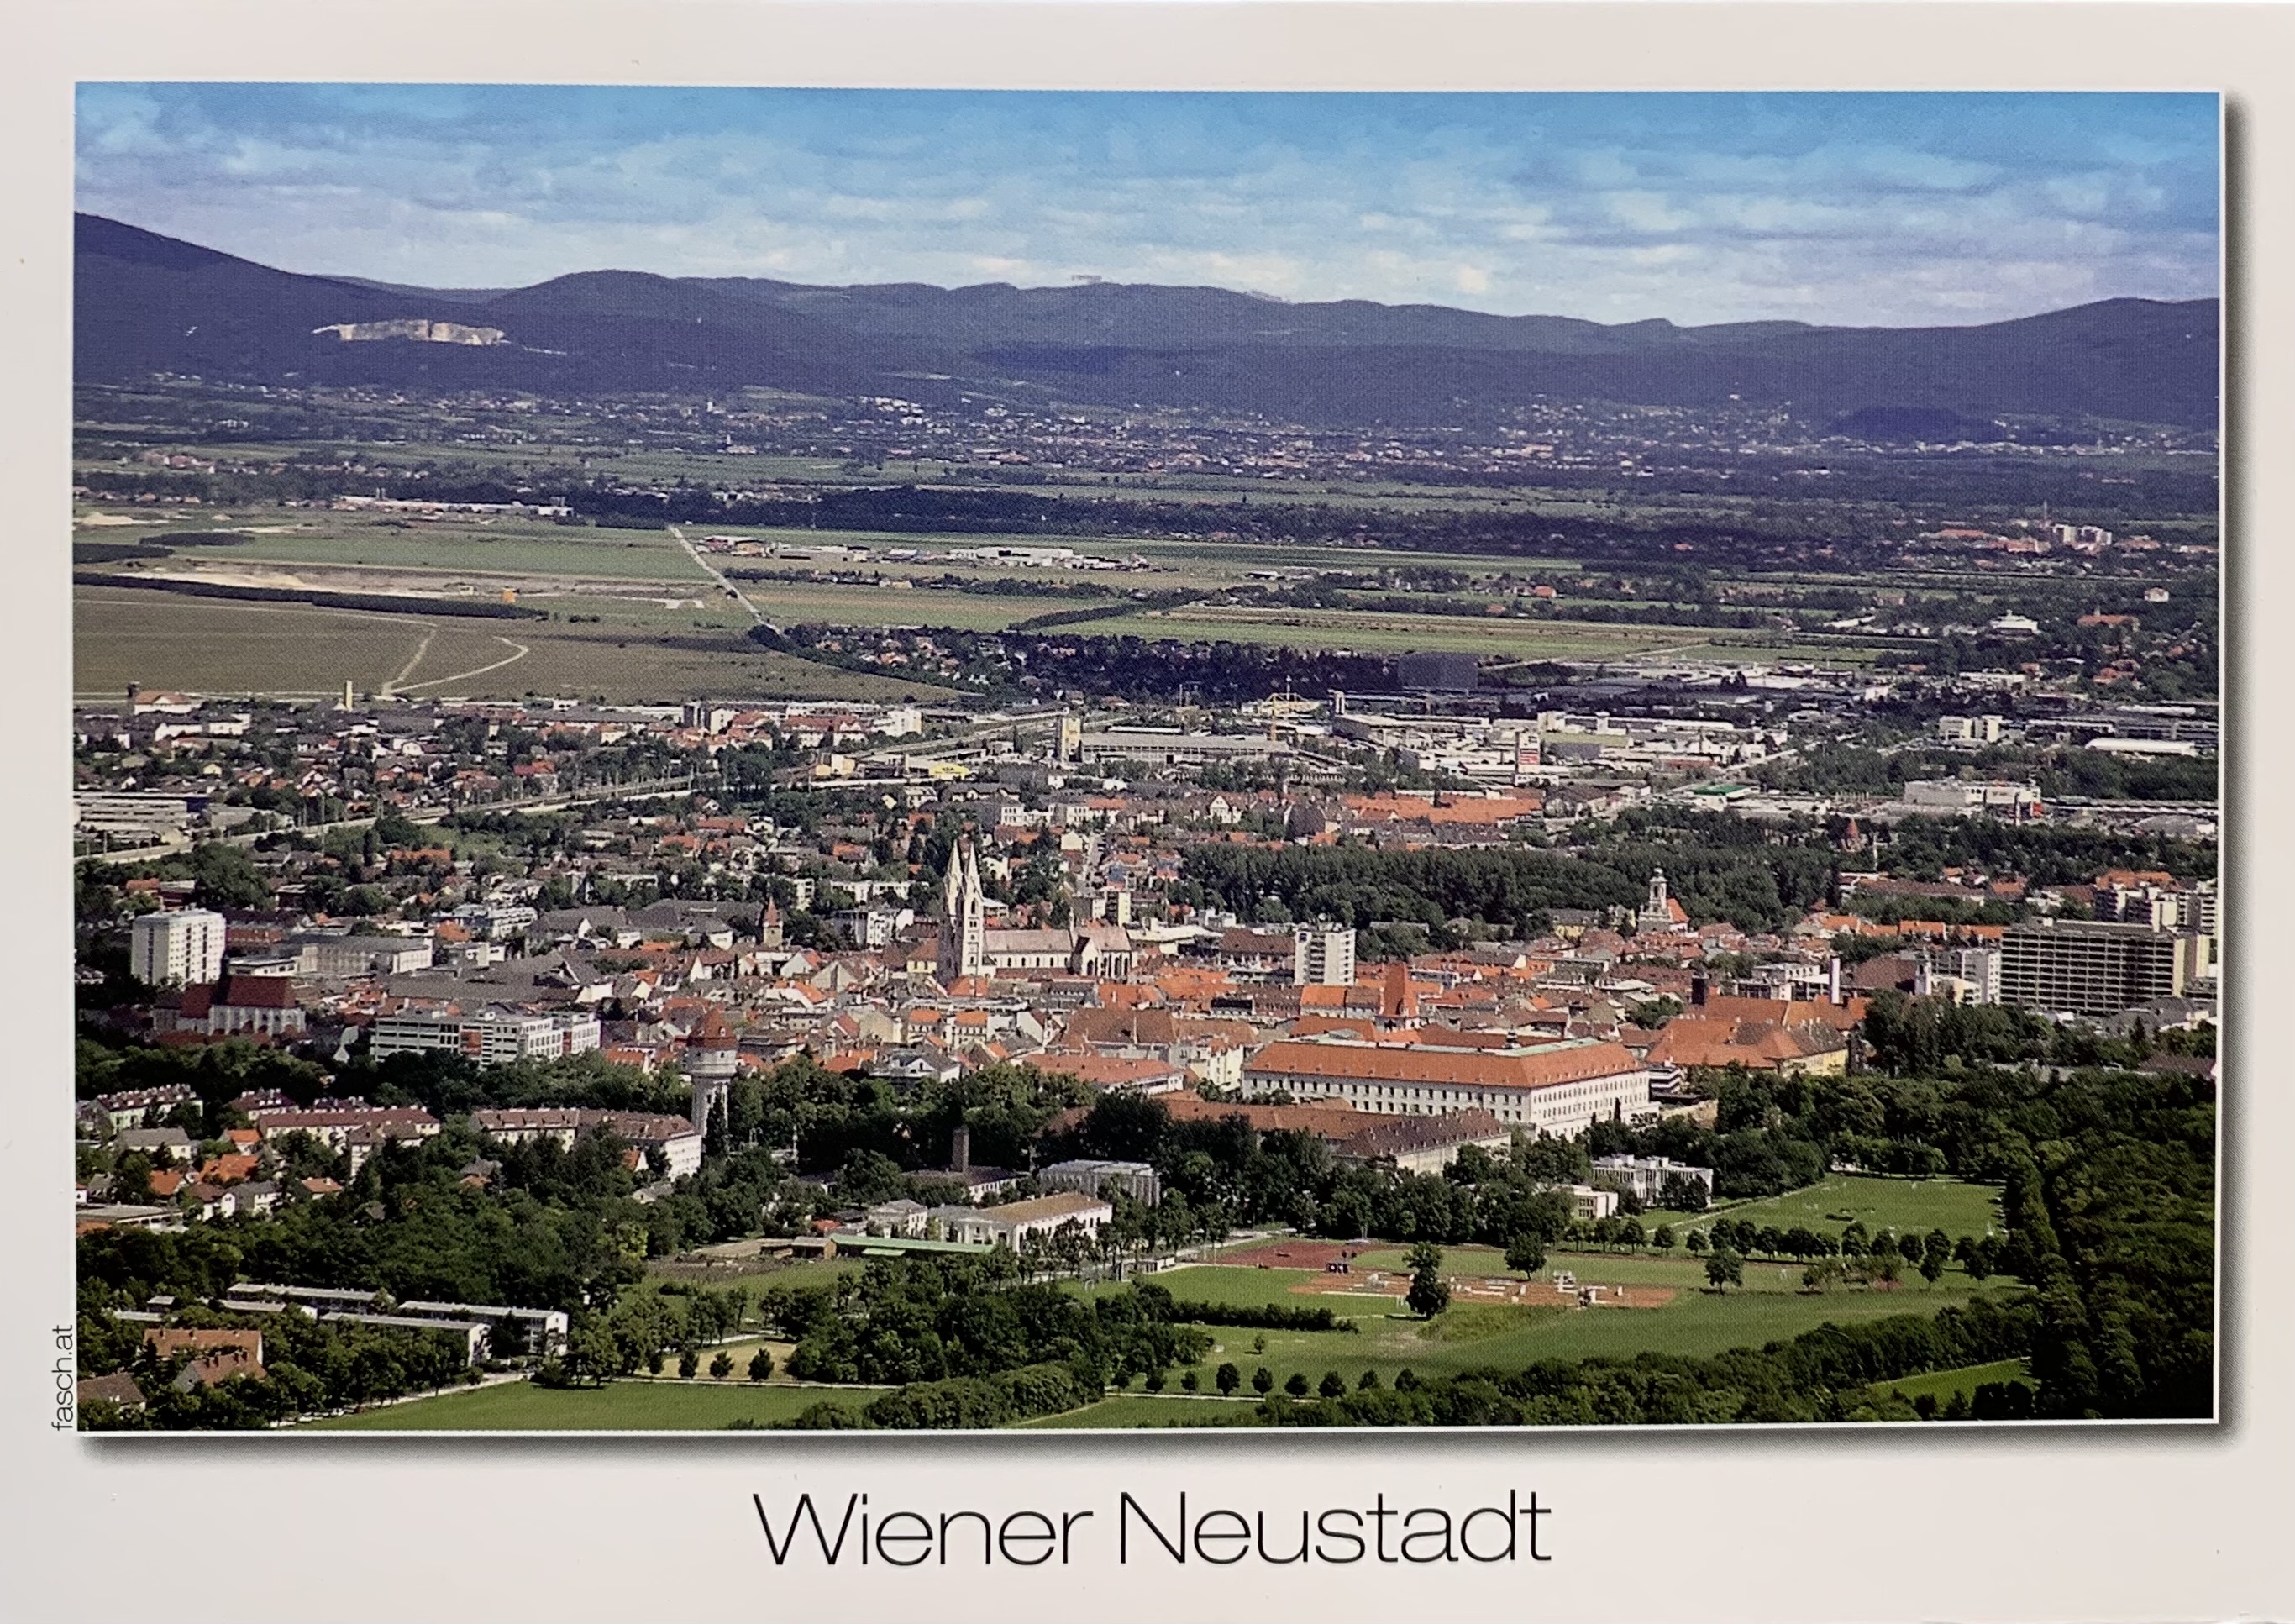 AK - Wiener Neustadt 01-2700-01